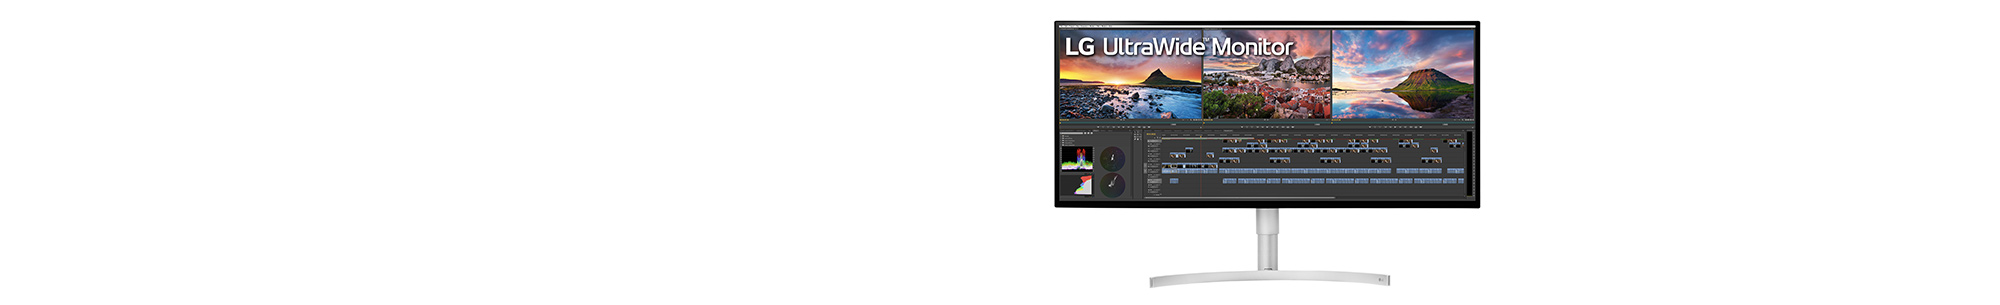 LG UltraWide monitor 